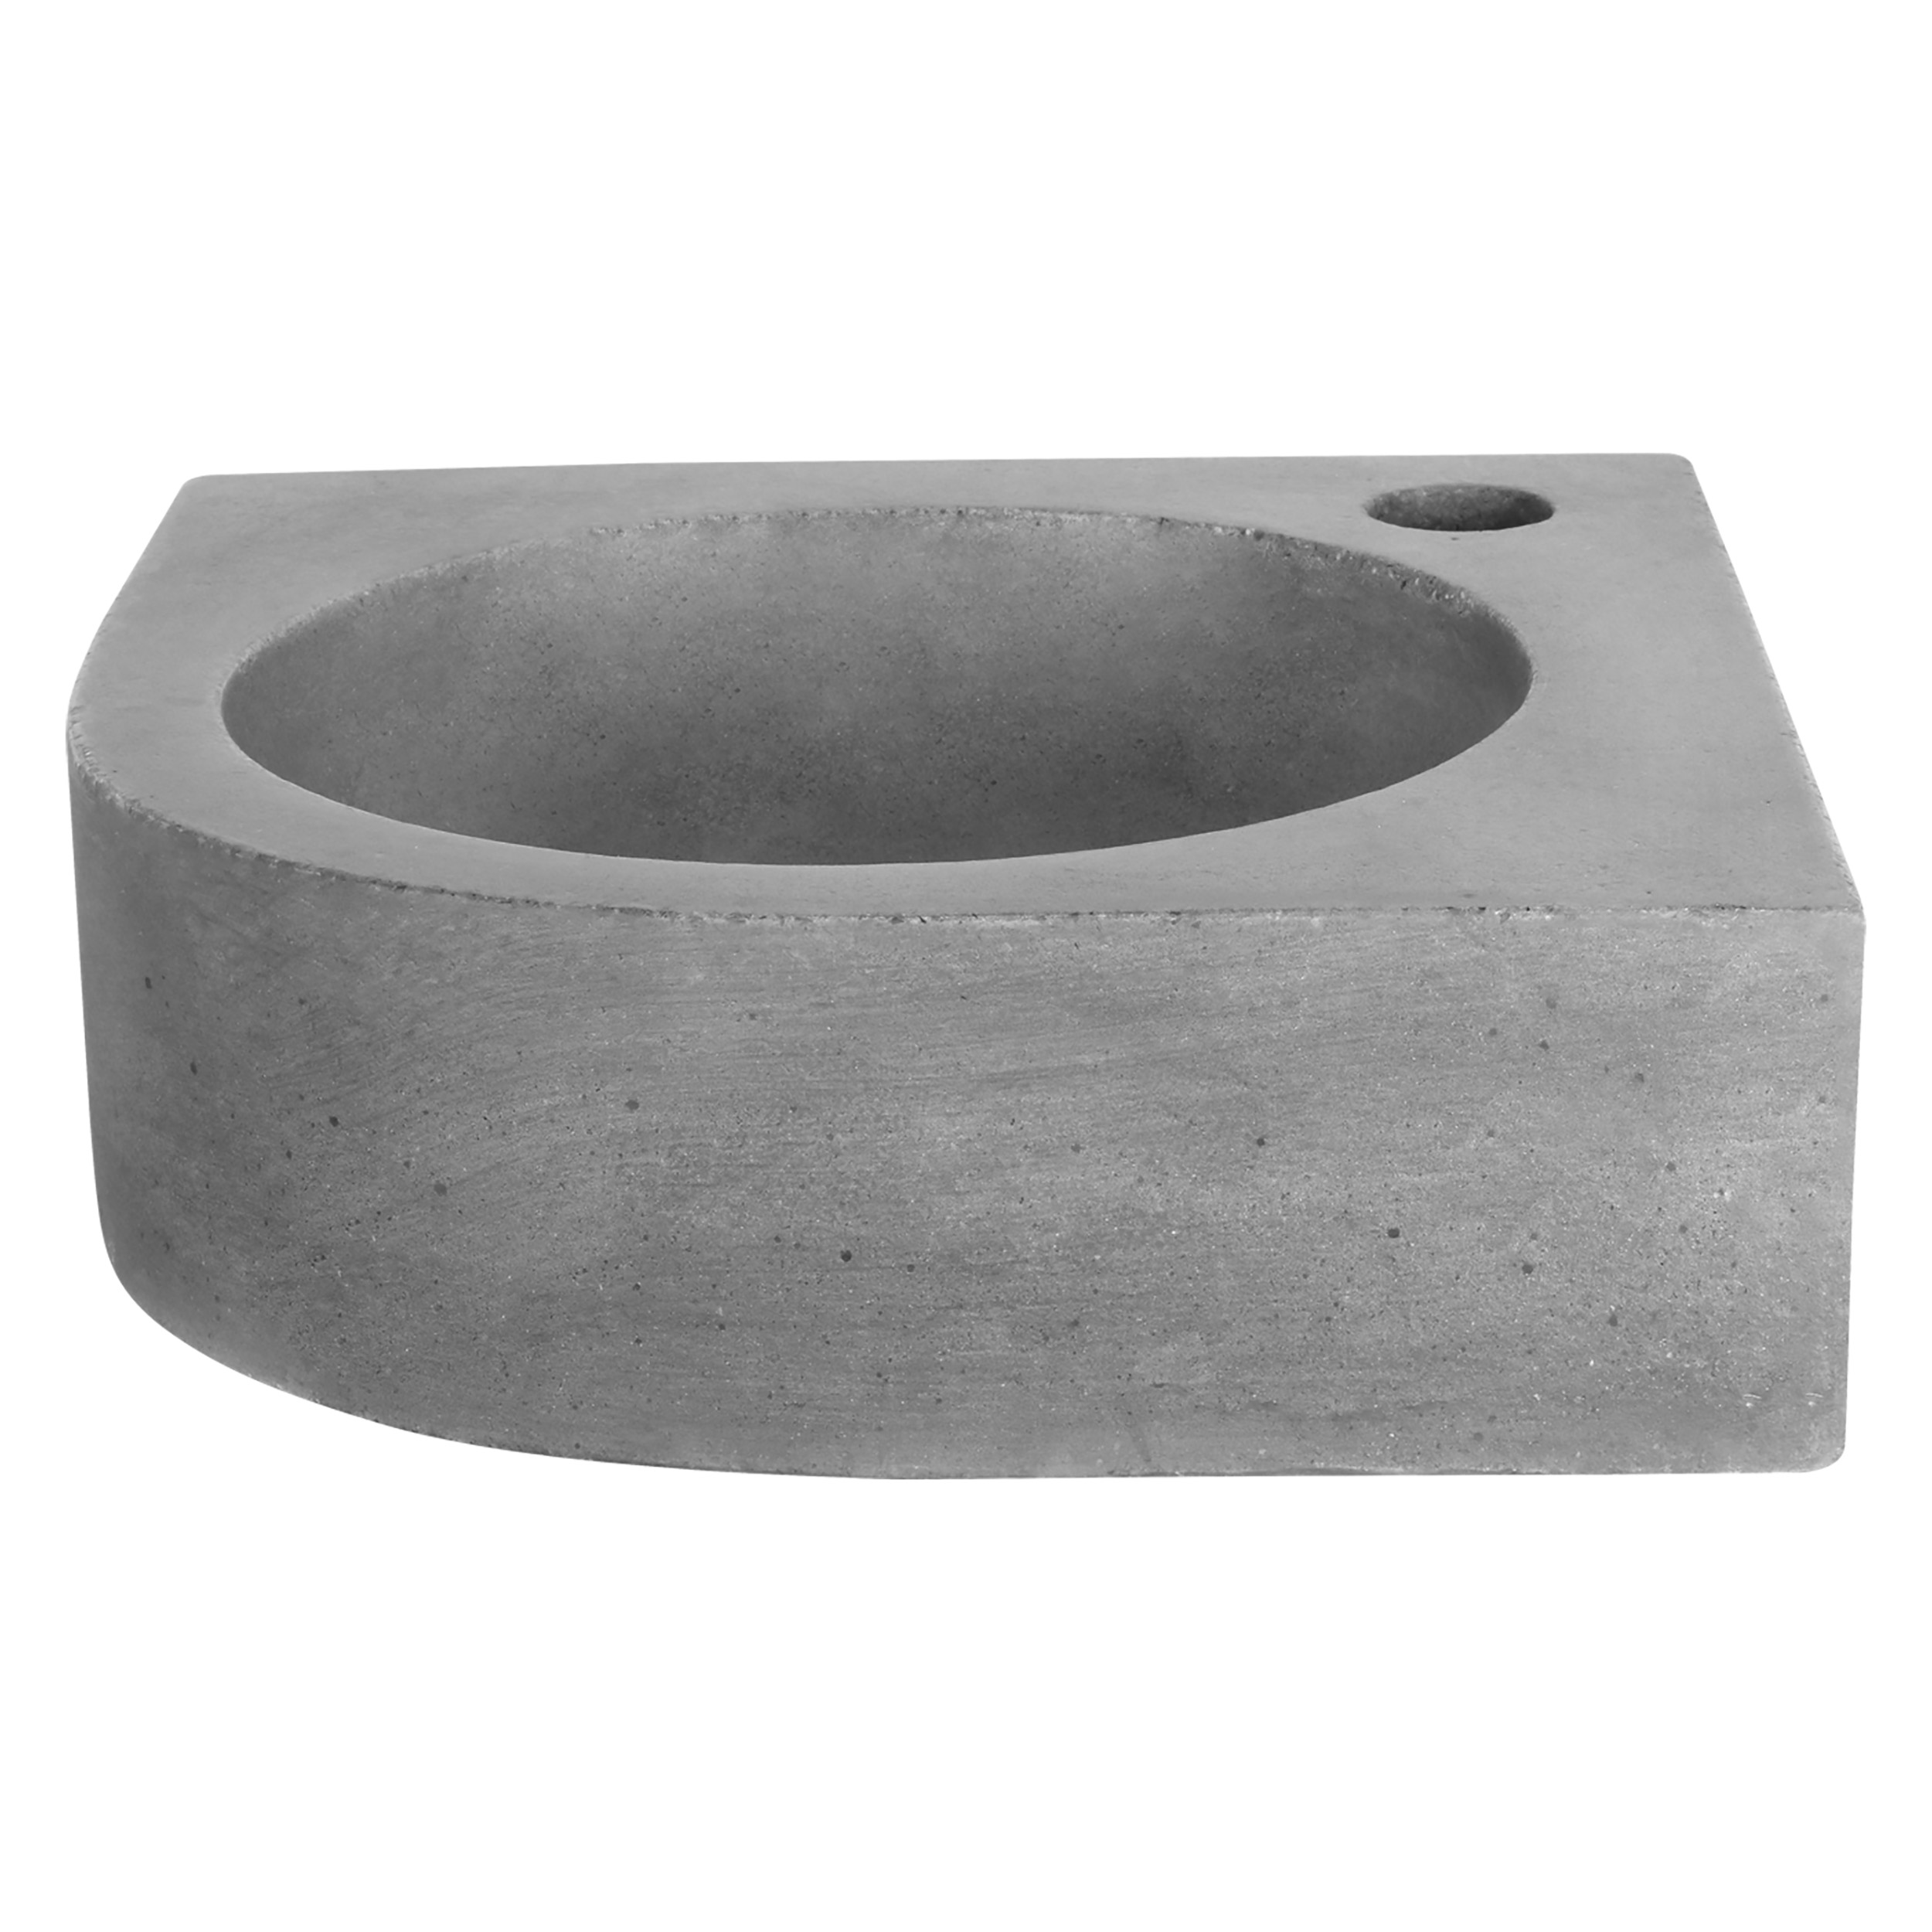 38.005.37 Differnz Cleo fontein beton - 30 x 30 x 10 cm - donkergrijs